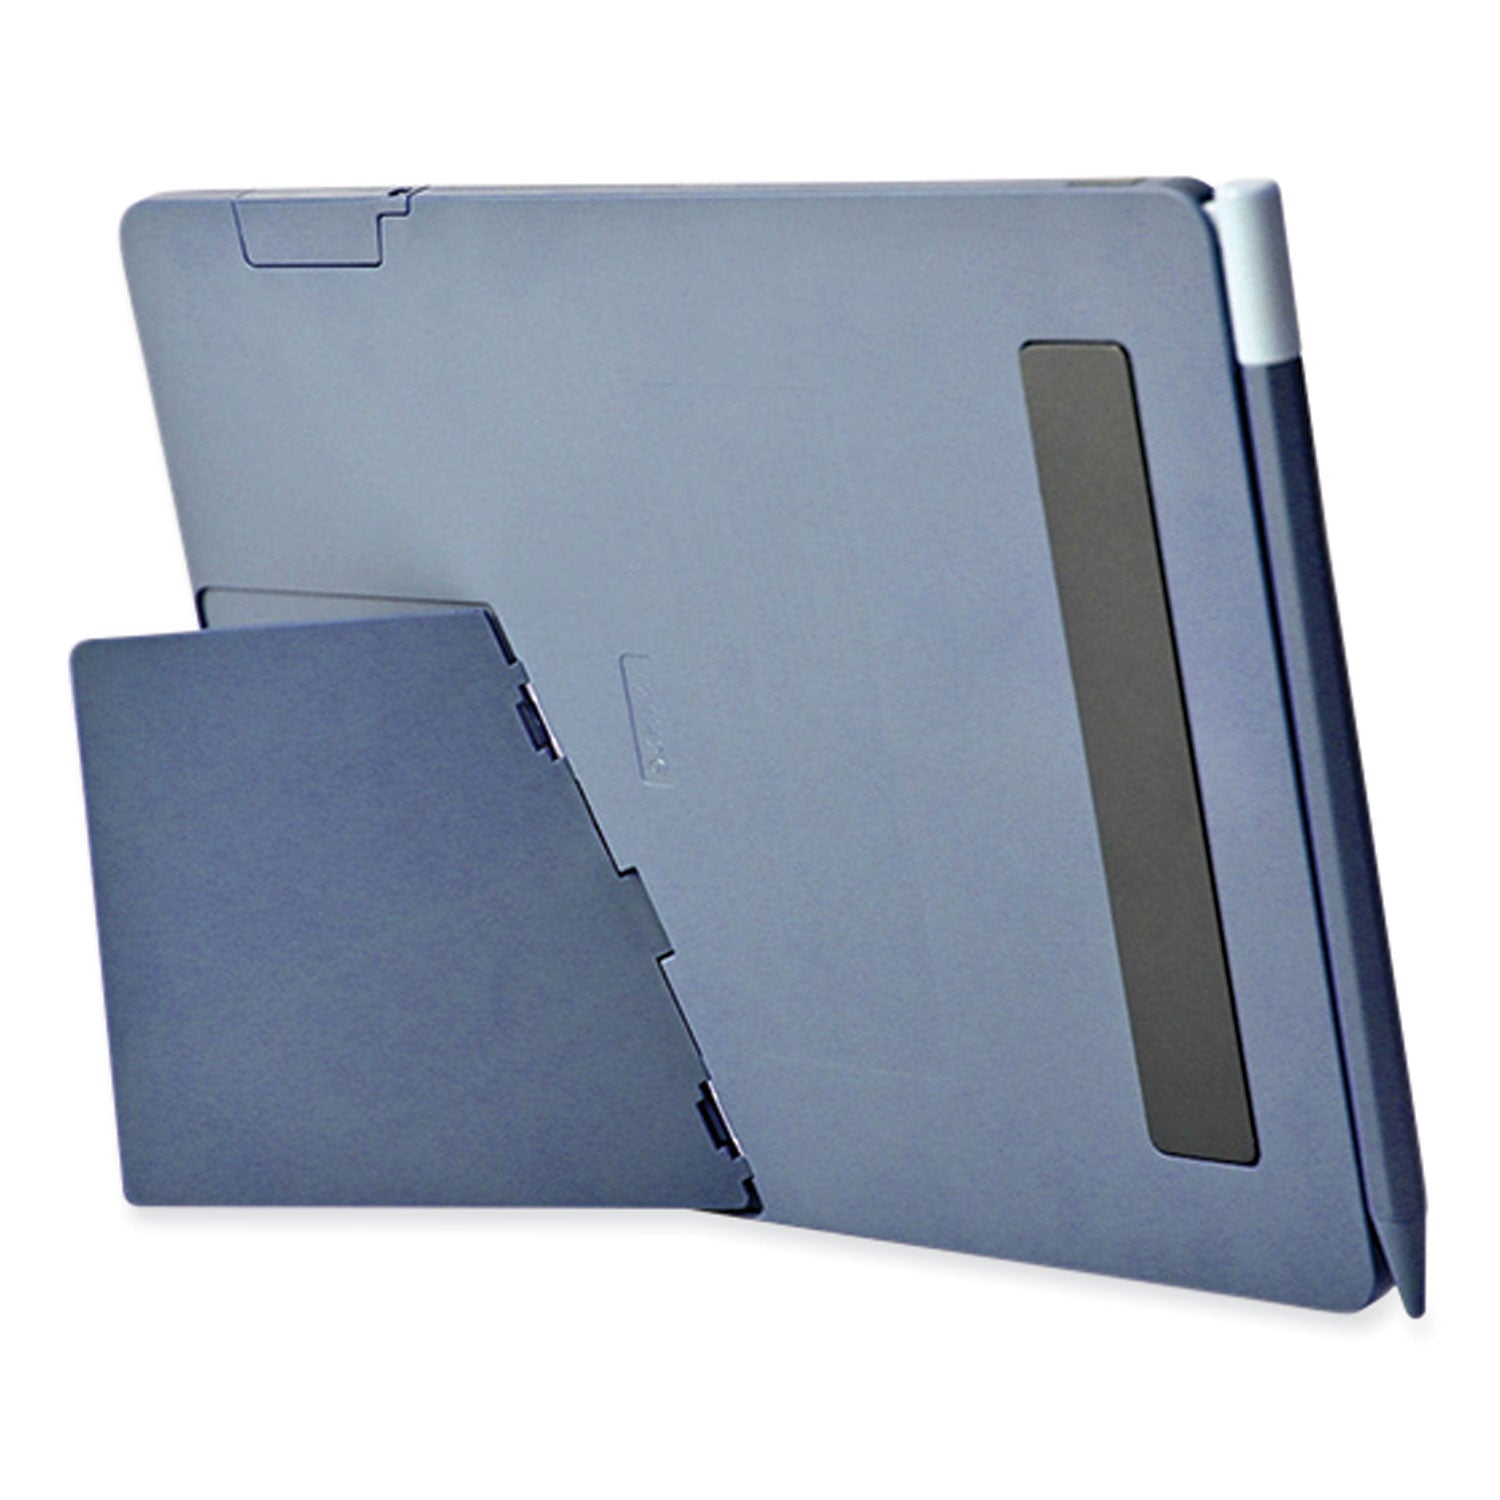 versaboard-reusable-writing-tablet-85-lcd-touchscreen-55-x-725-slate-blue-black_imv0260001 - 5